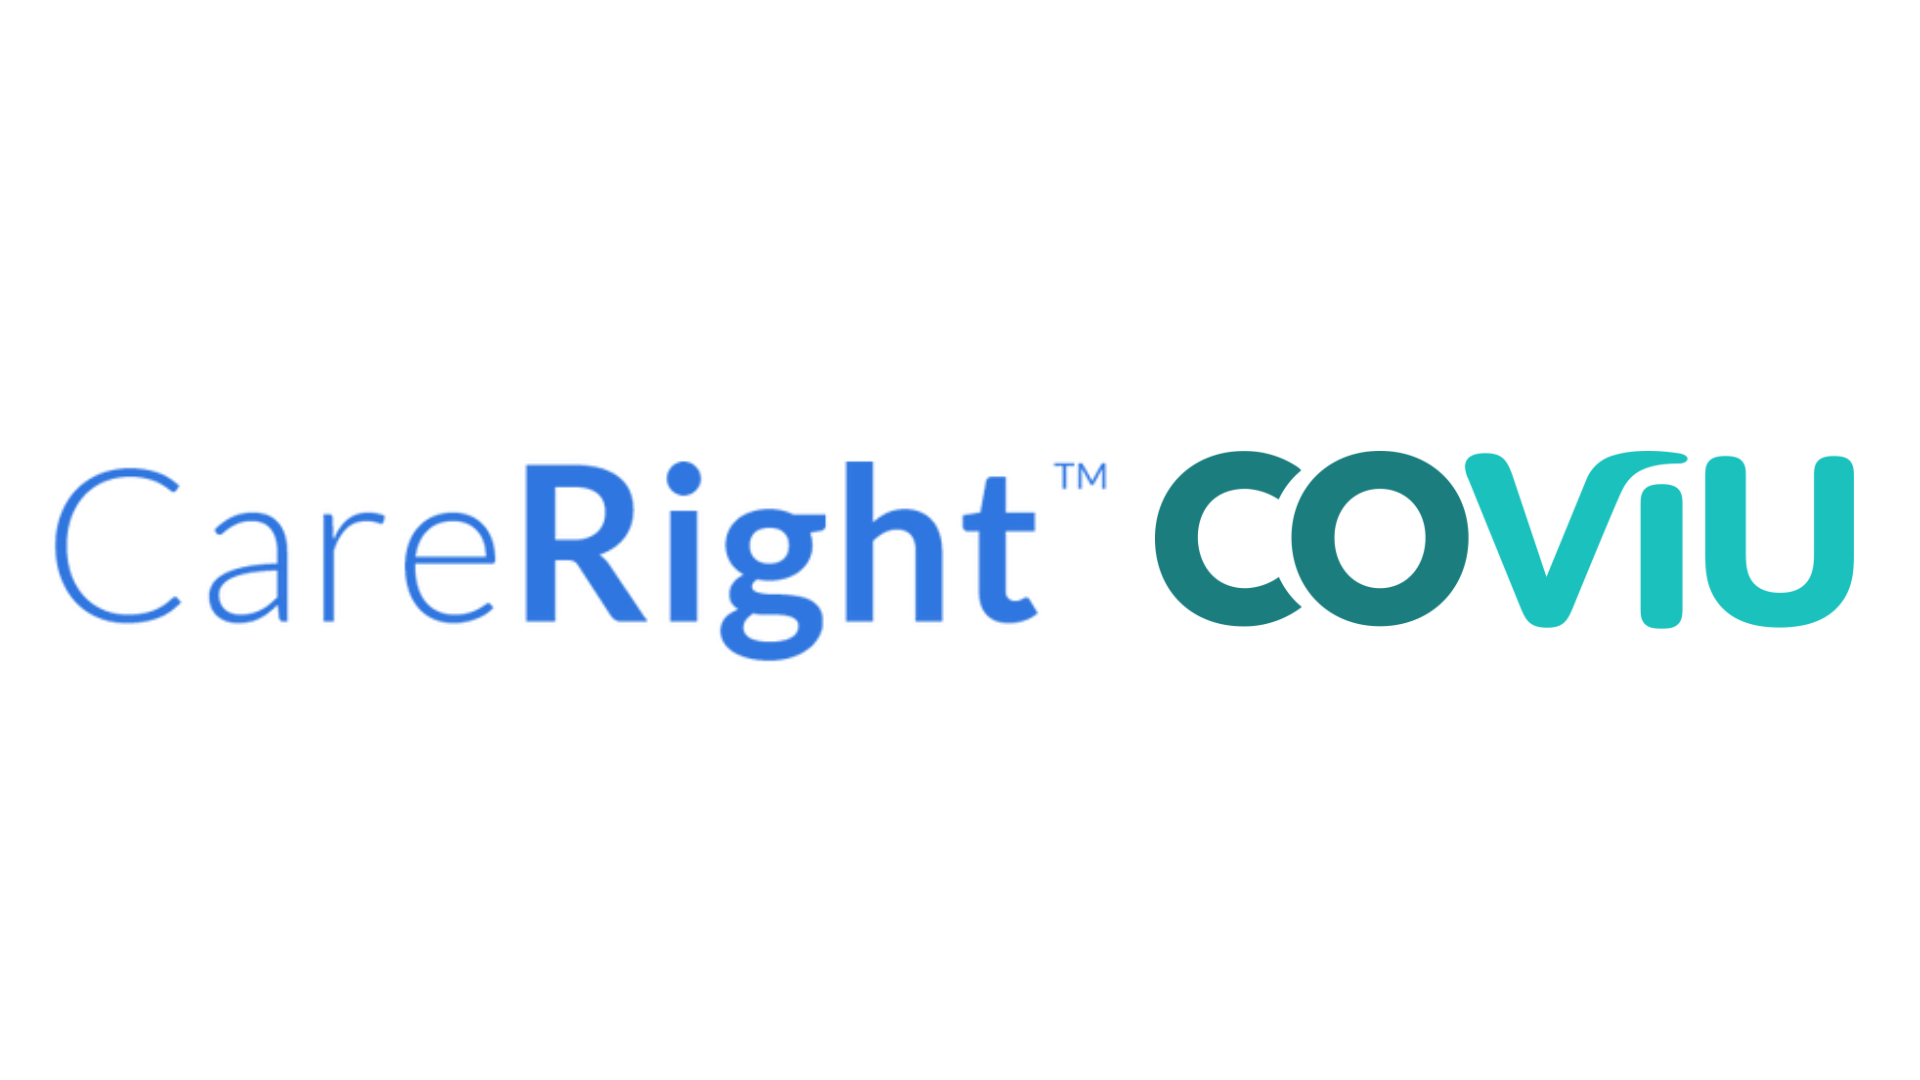 careright coviu logos